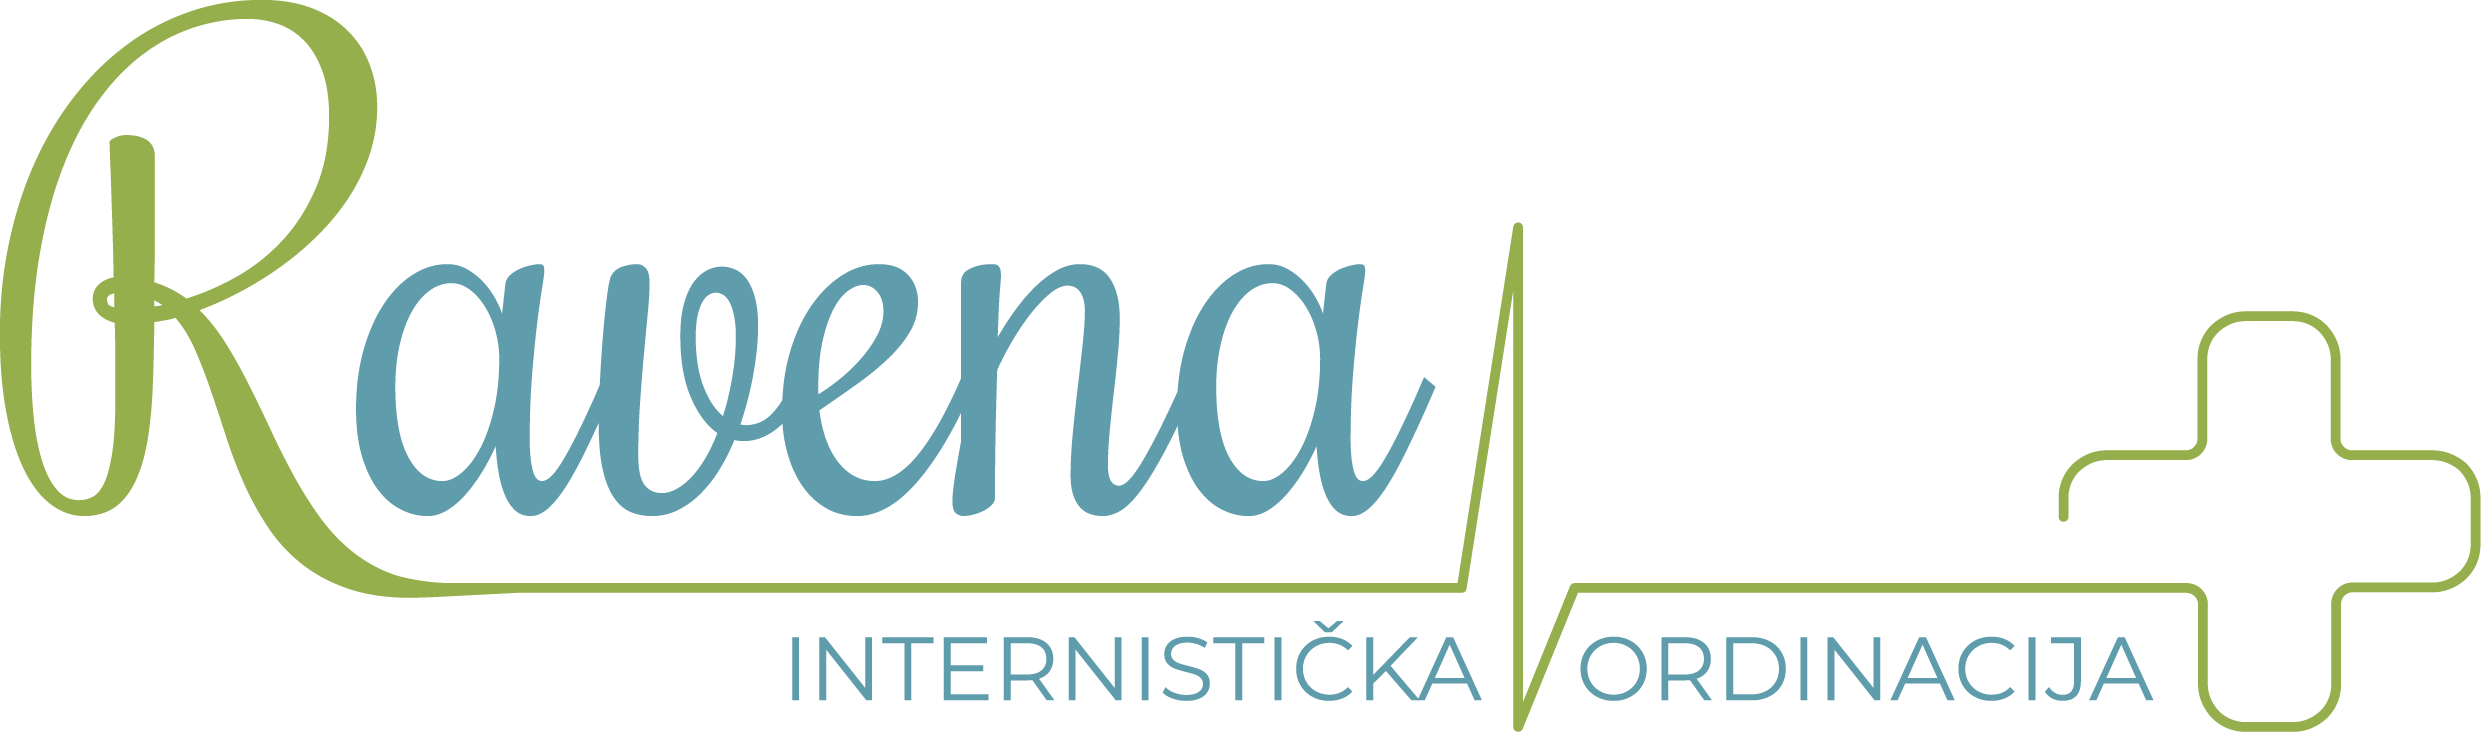 Ravena logo